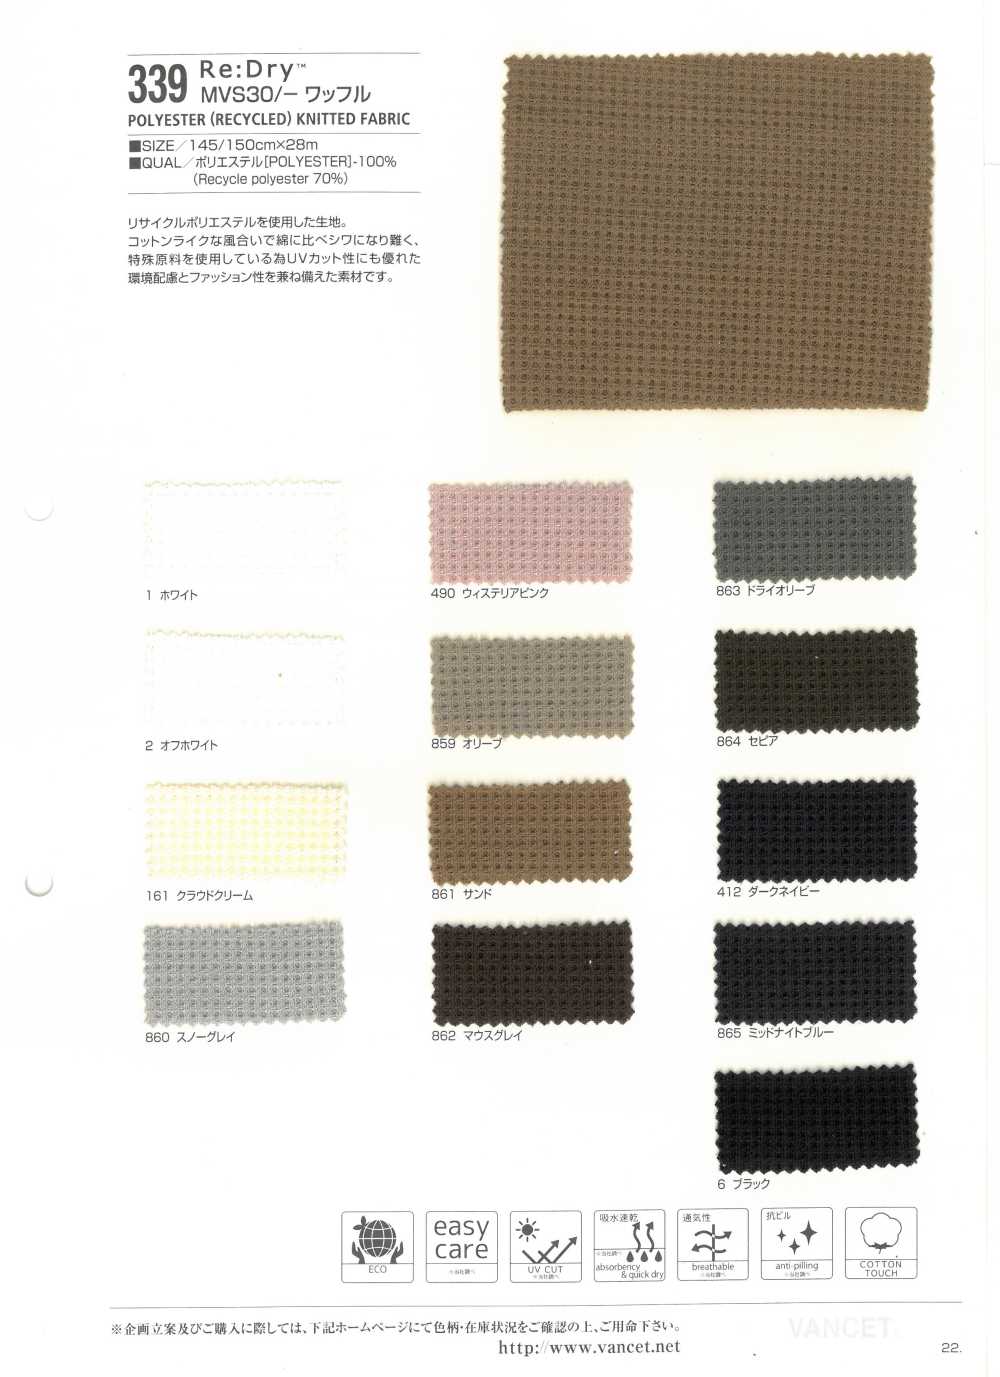 339 Re: Dry (TM) MVS 30 / Waffle Knit[Tessile / Tessuto] VANCET